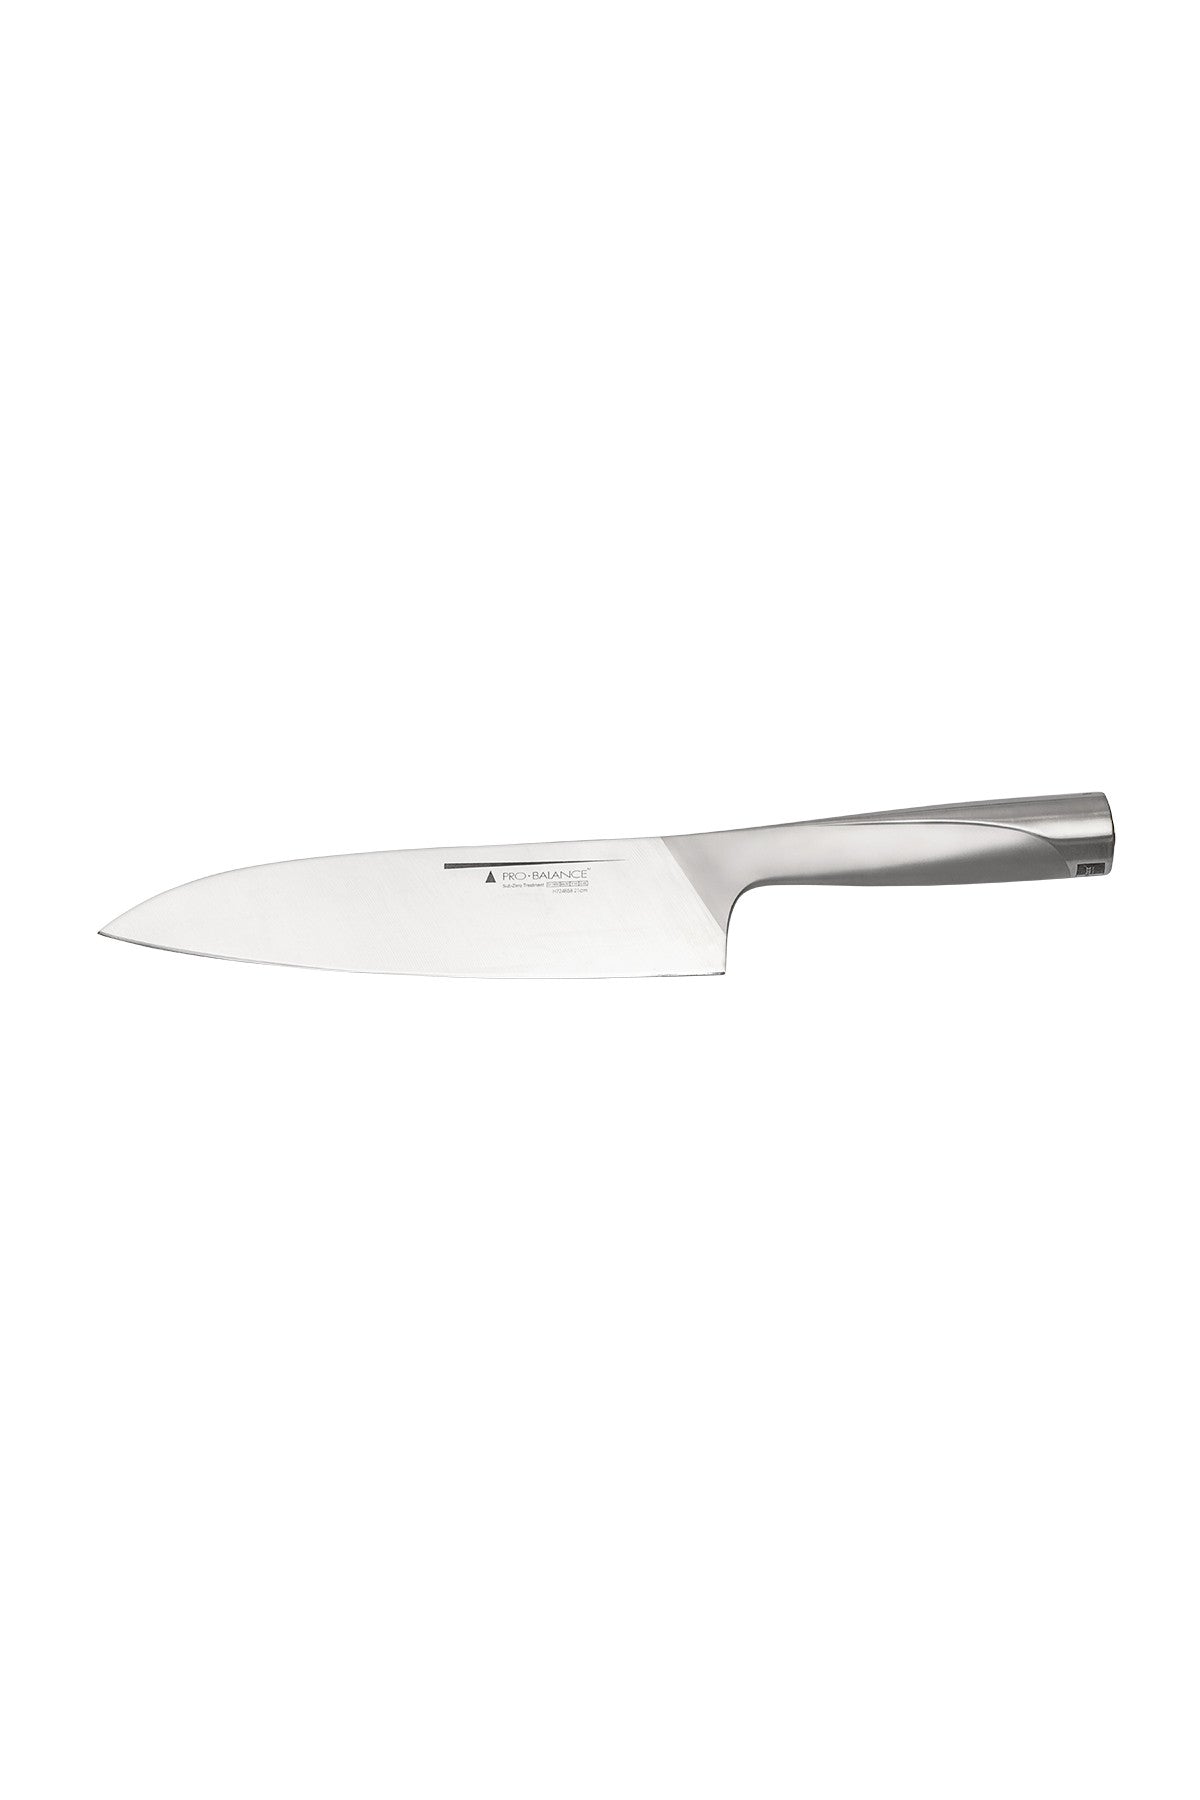 CHEF'S KNIFE 21 CM PRO-BALANCE